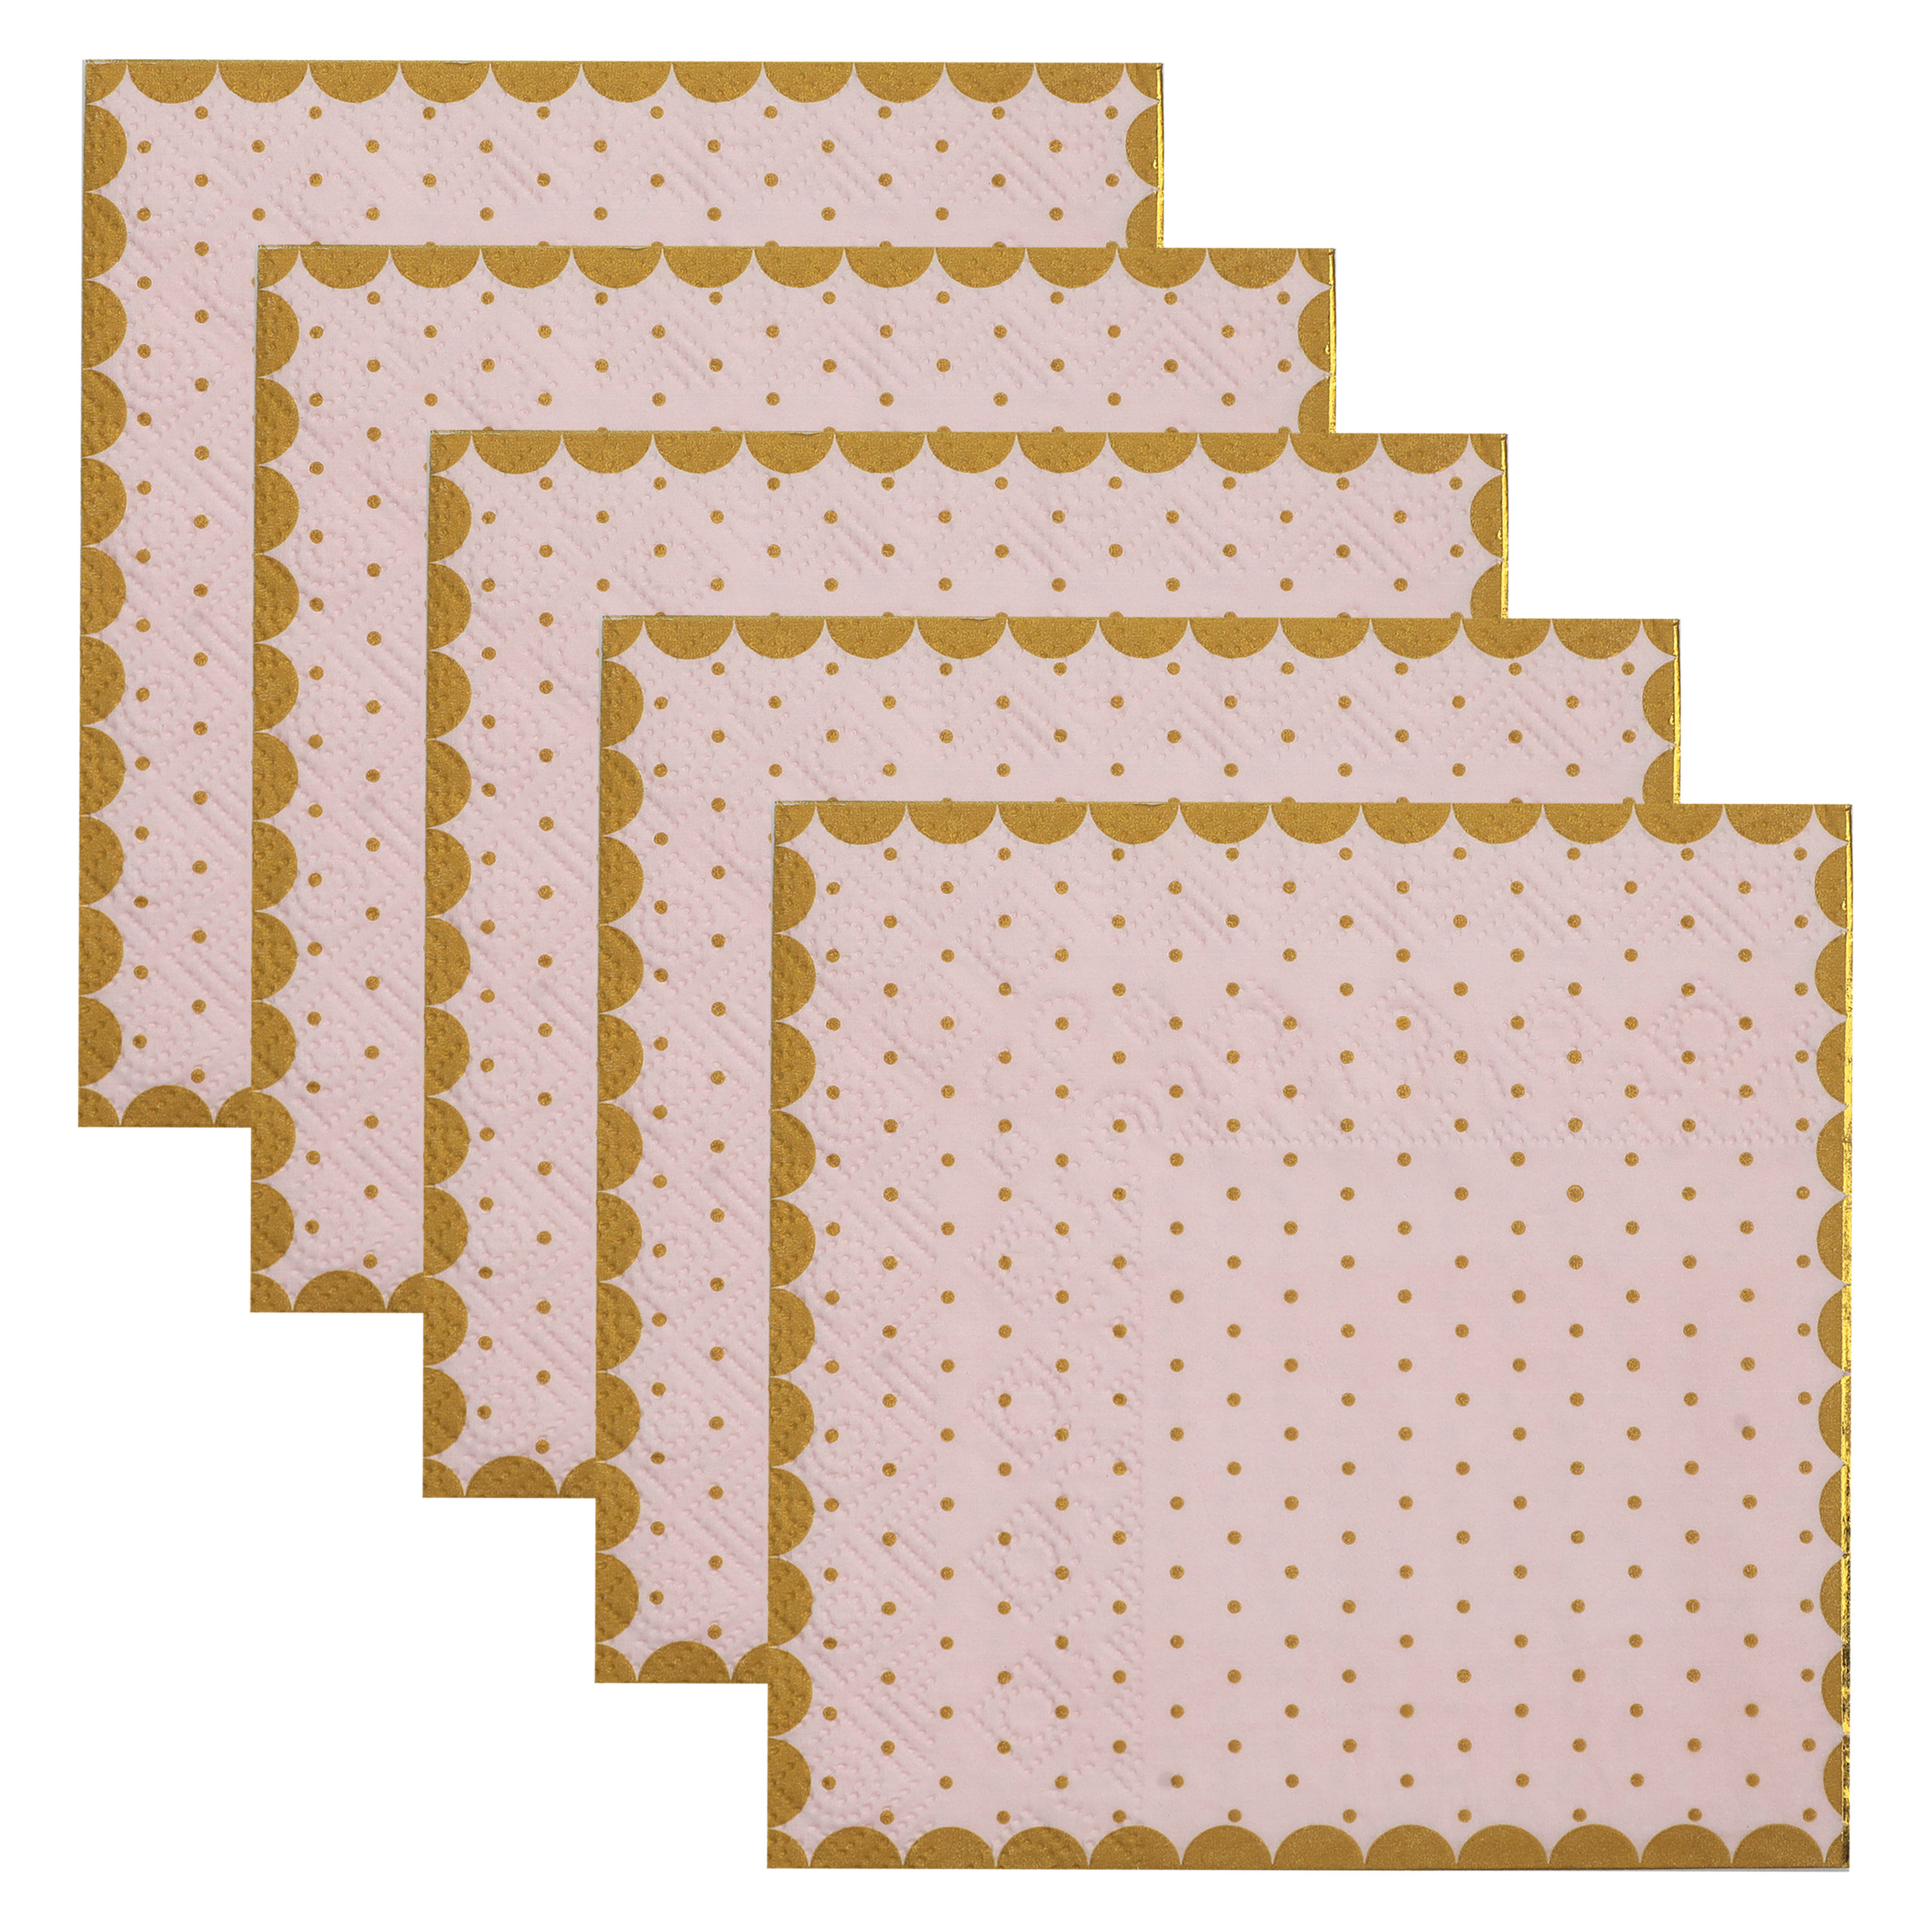 Santex feest servetten stippen 100x stuks 25 x 25 cm papier roze-goud